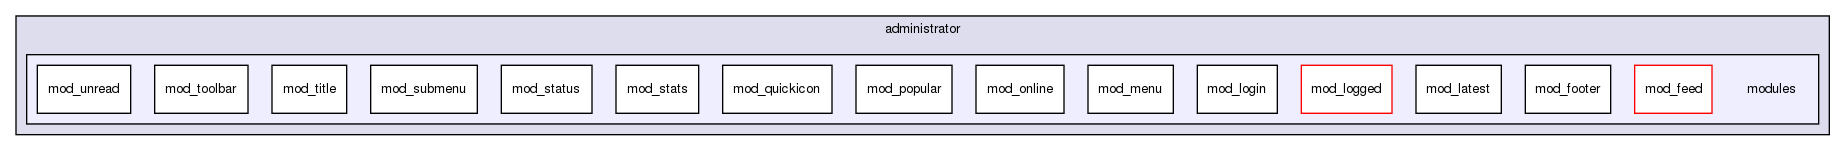 joomla-1.5.26/administrator/modules/